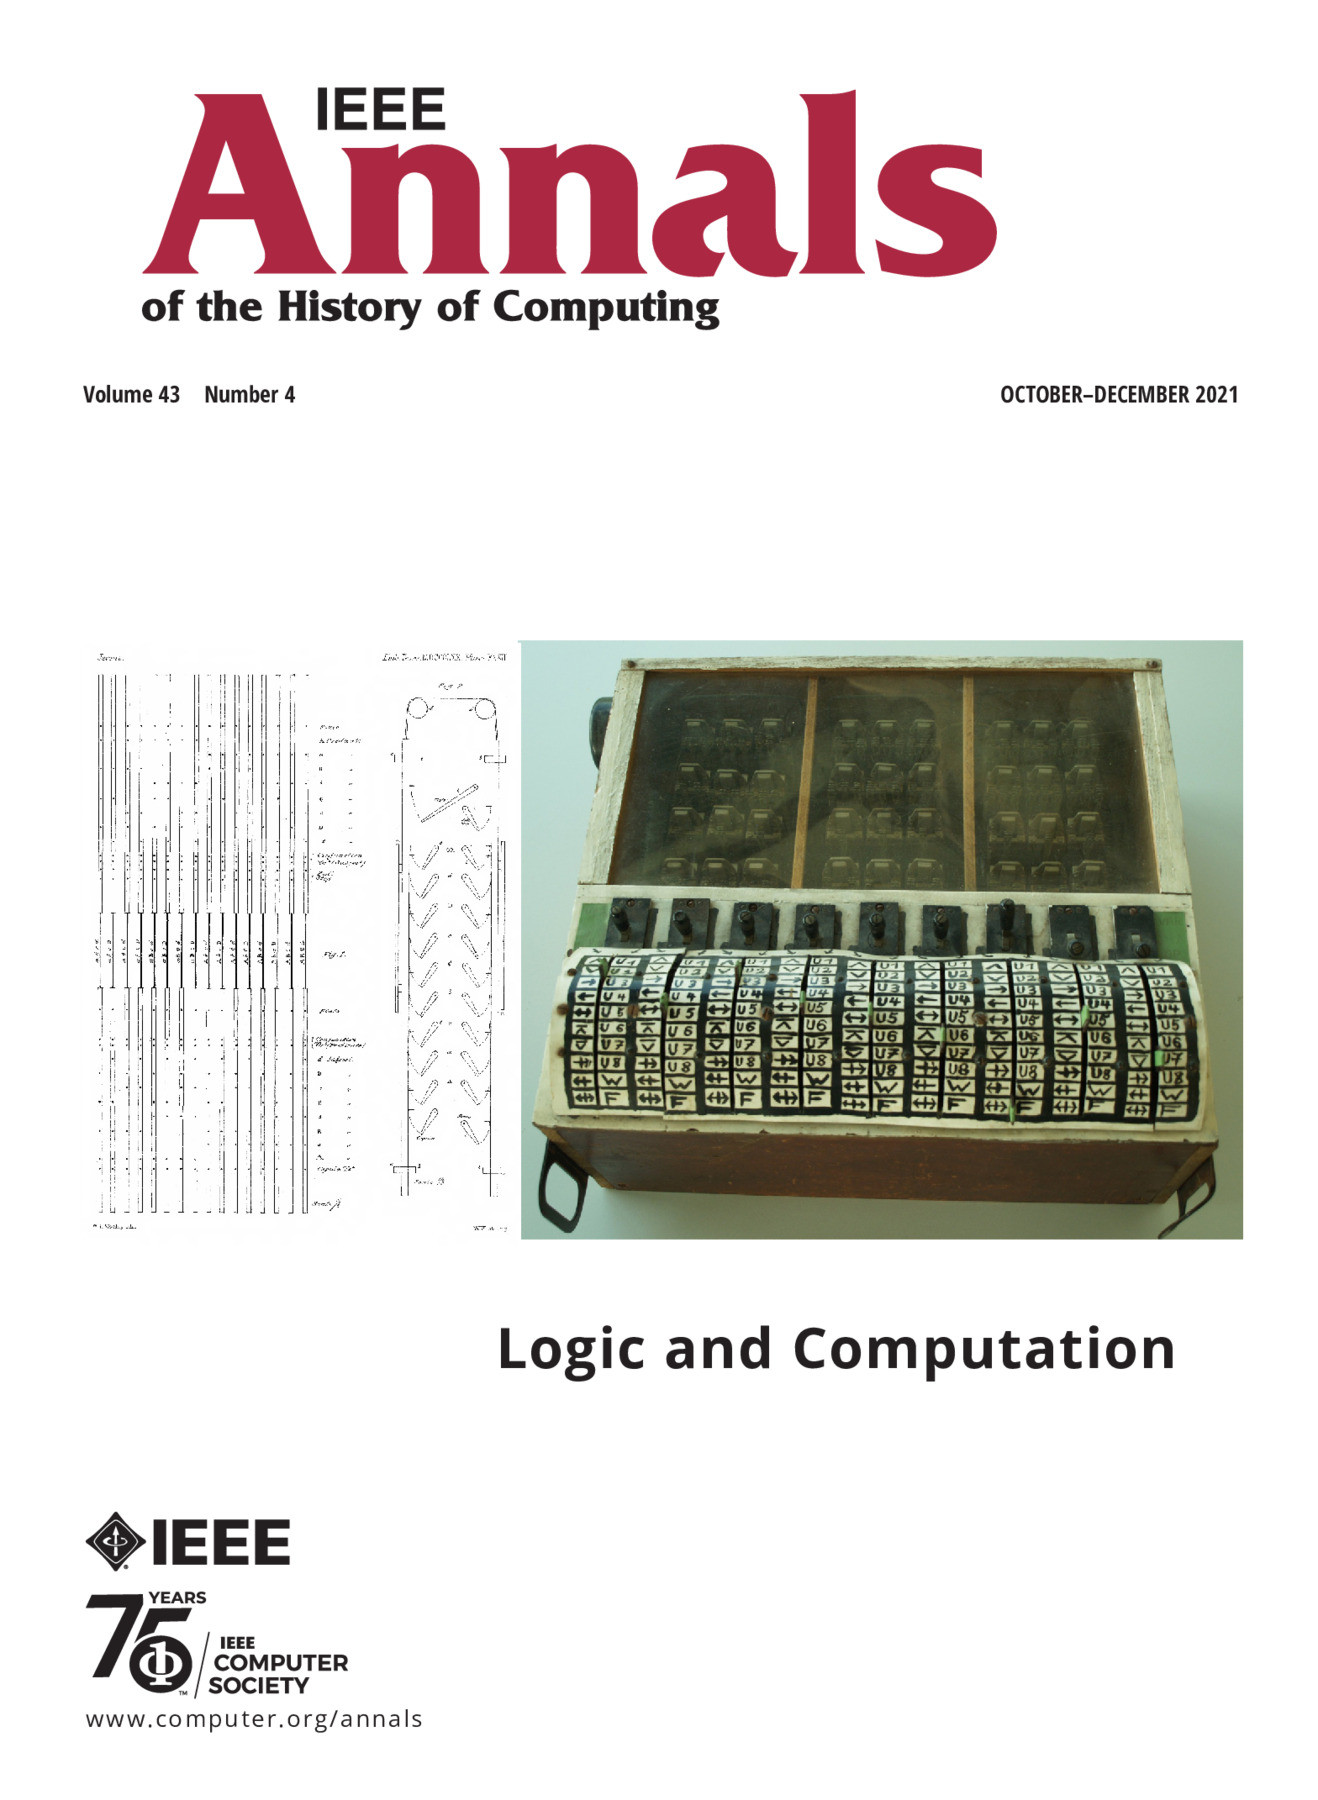 IEEE Annals of the History of Computing October/November/December 2021 Vol. 43 No. 4